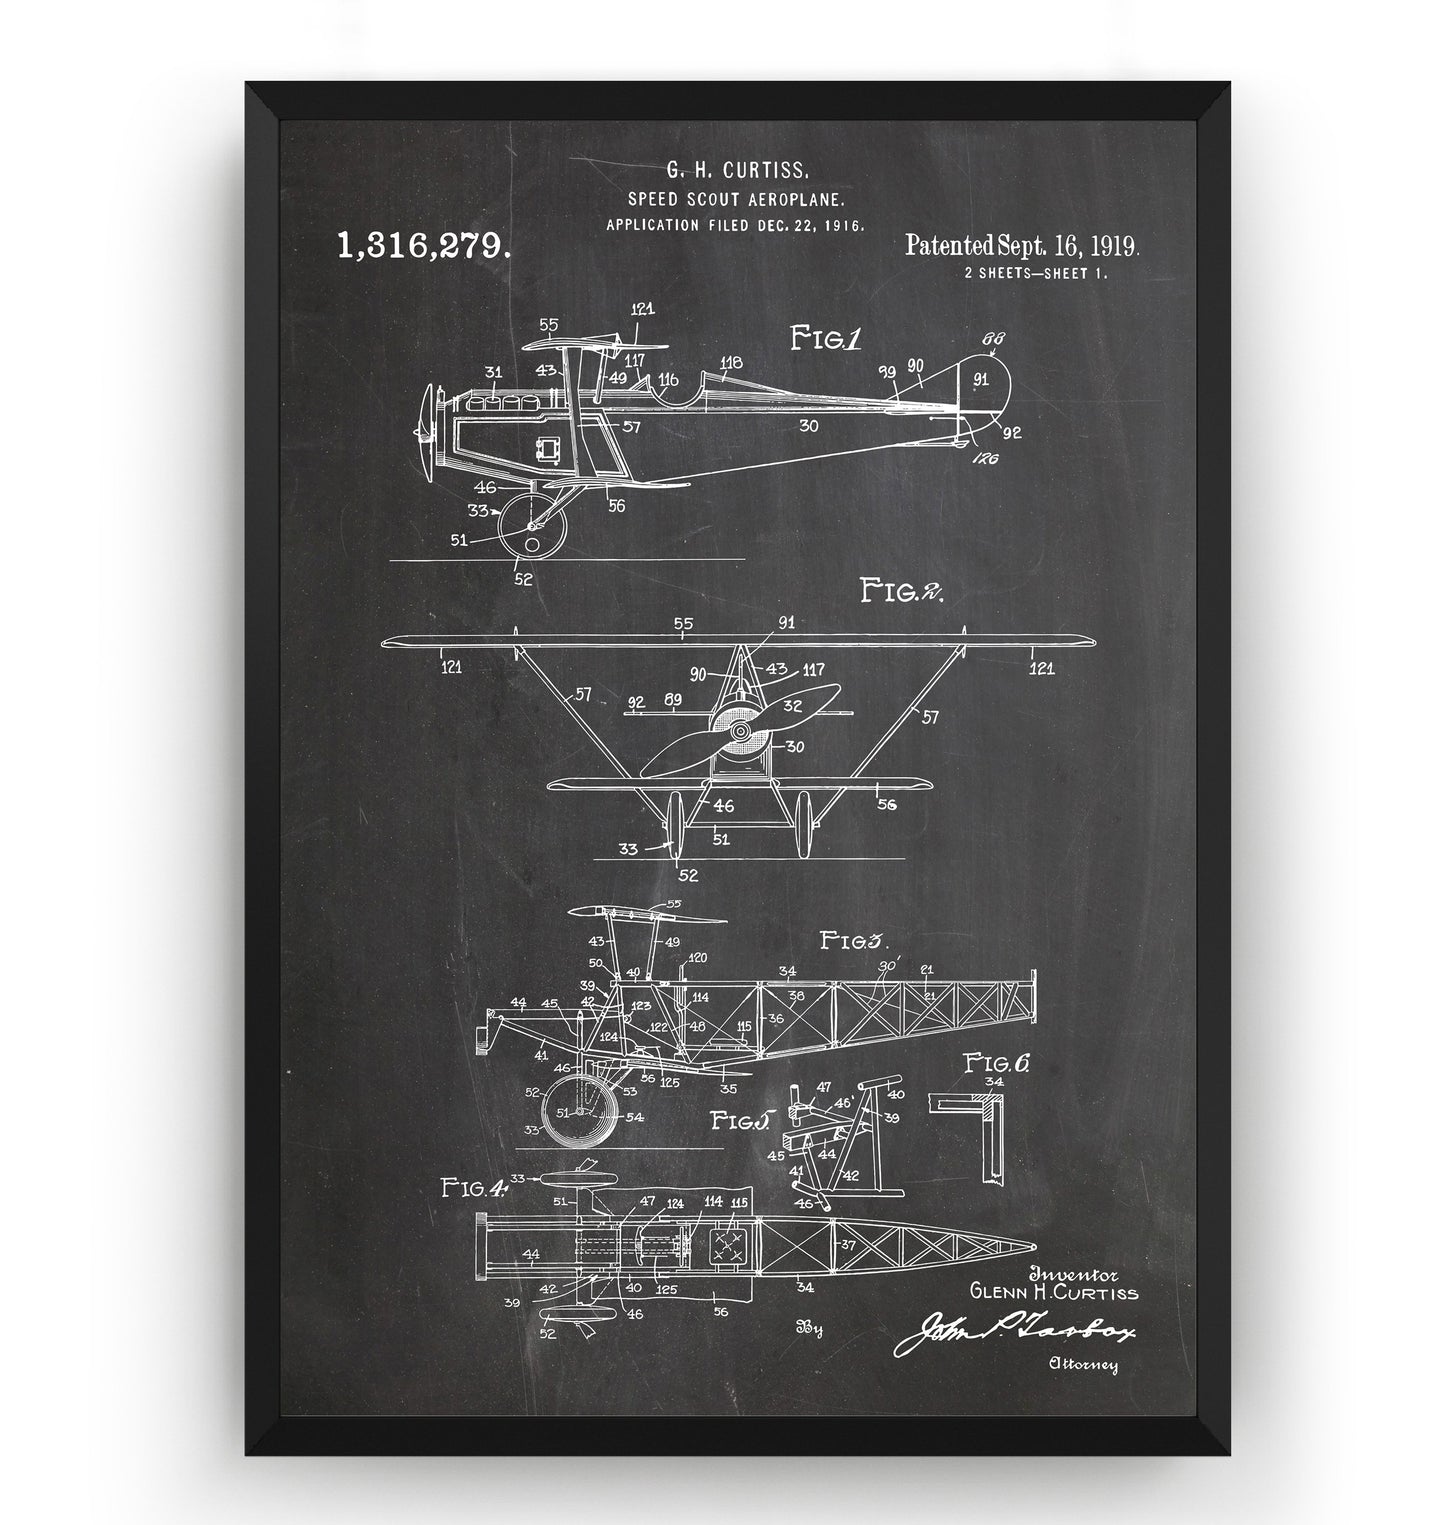 Speed Scout Aeroplane 1919 Patent Print - Magic Posters